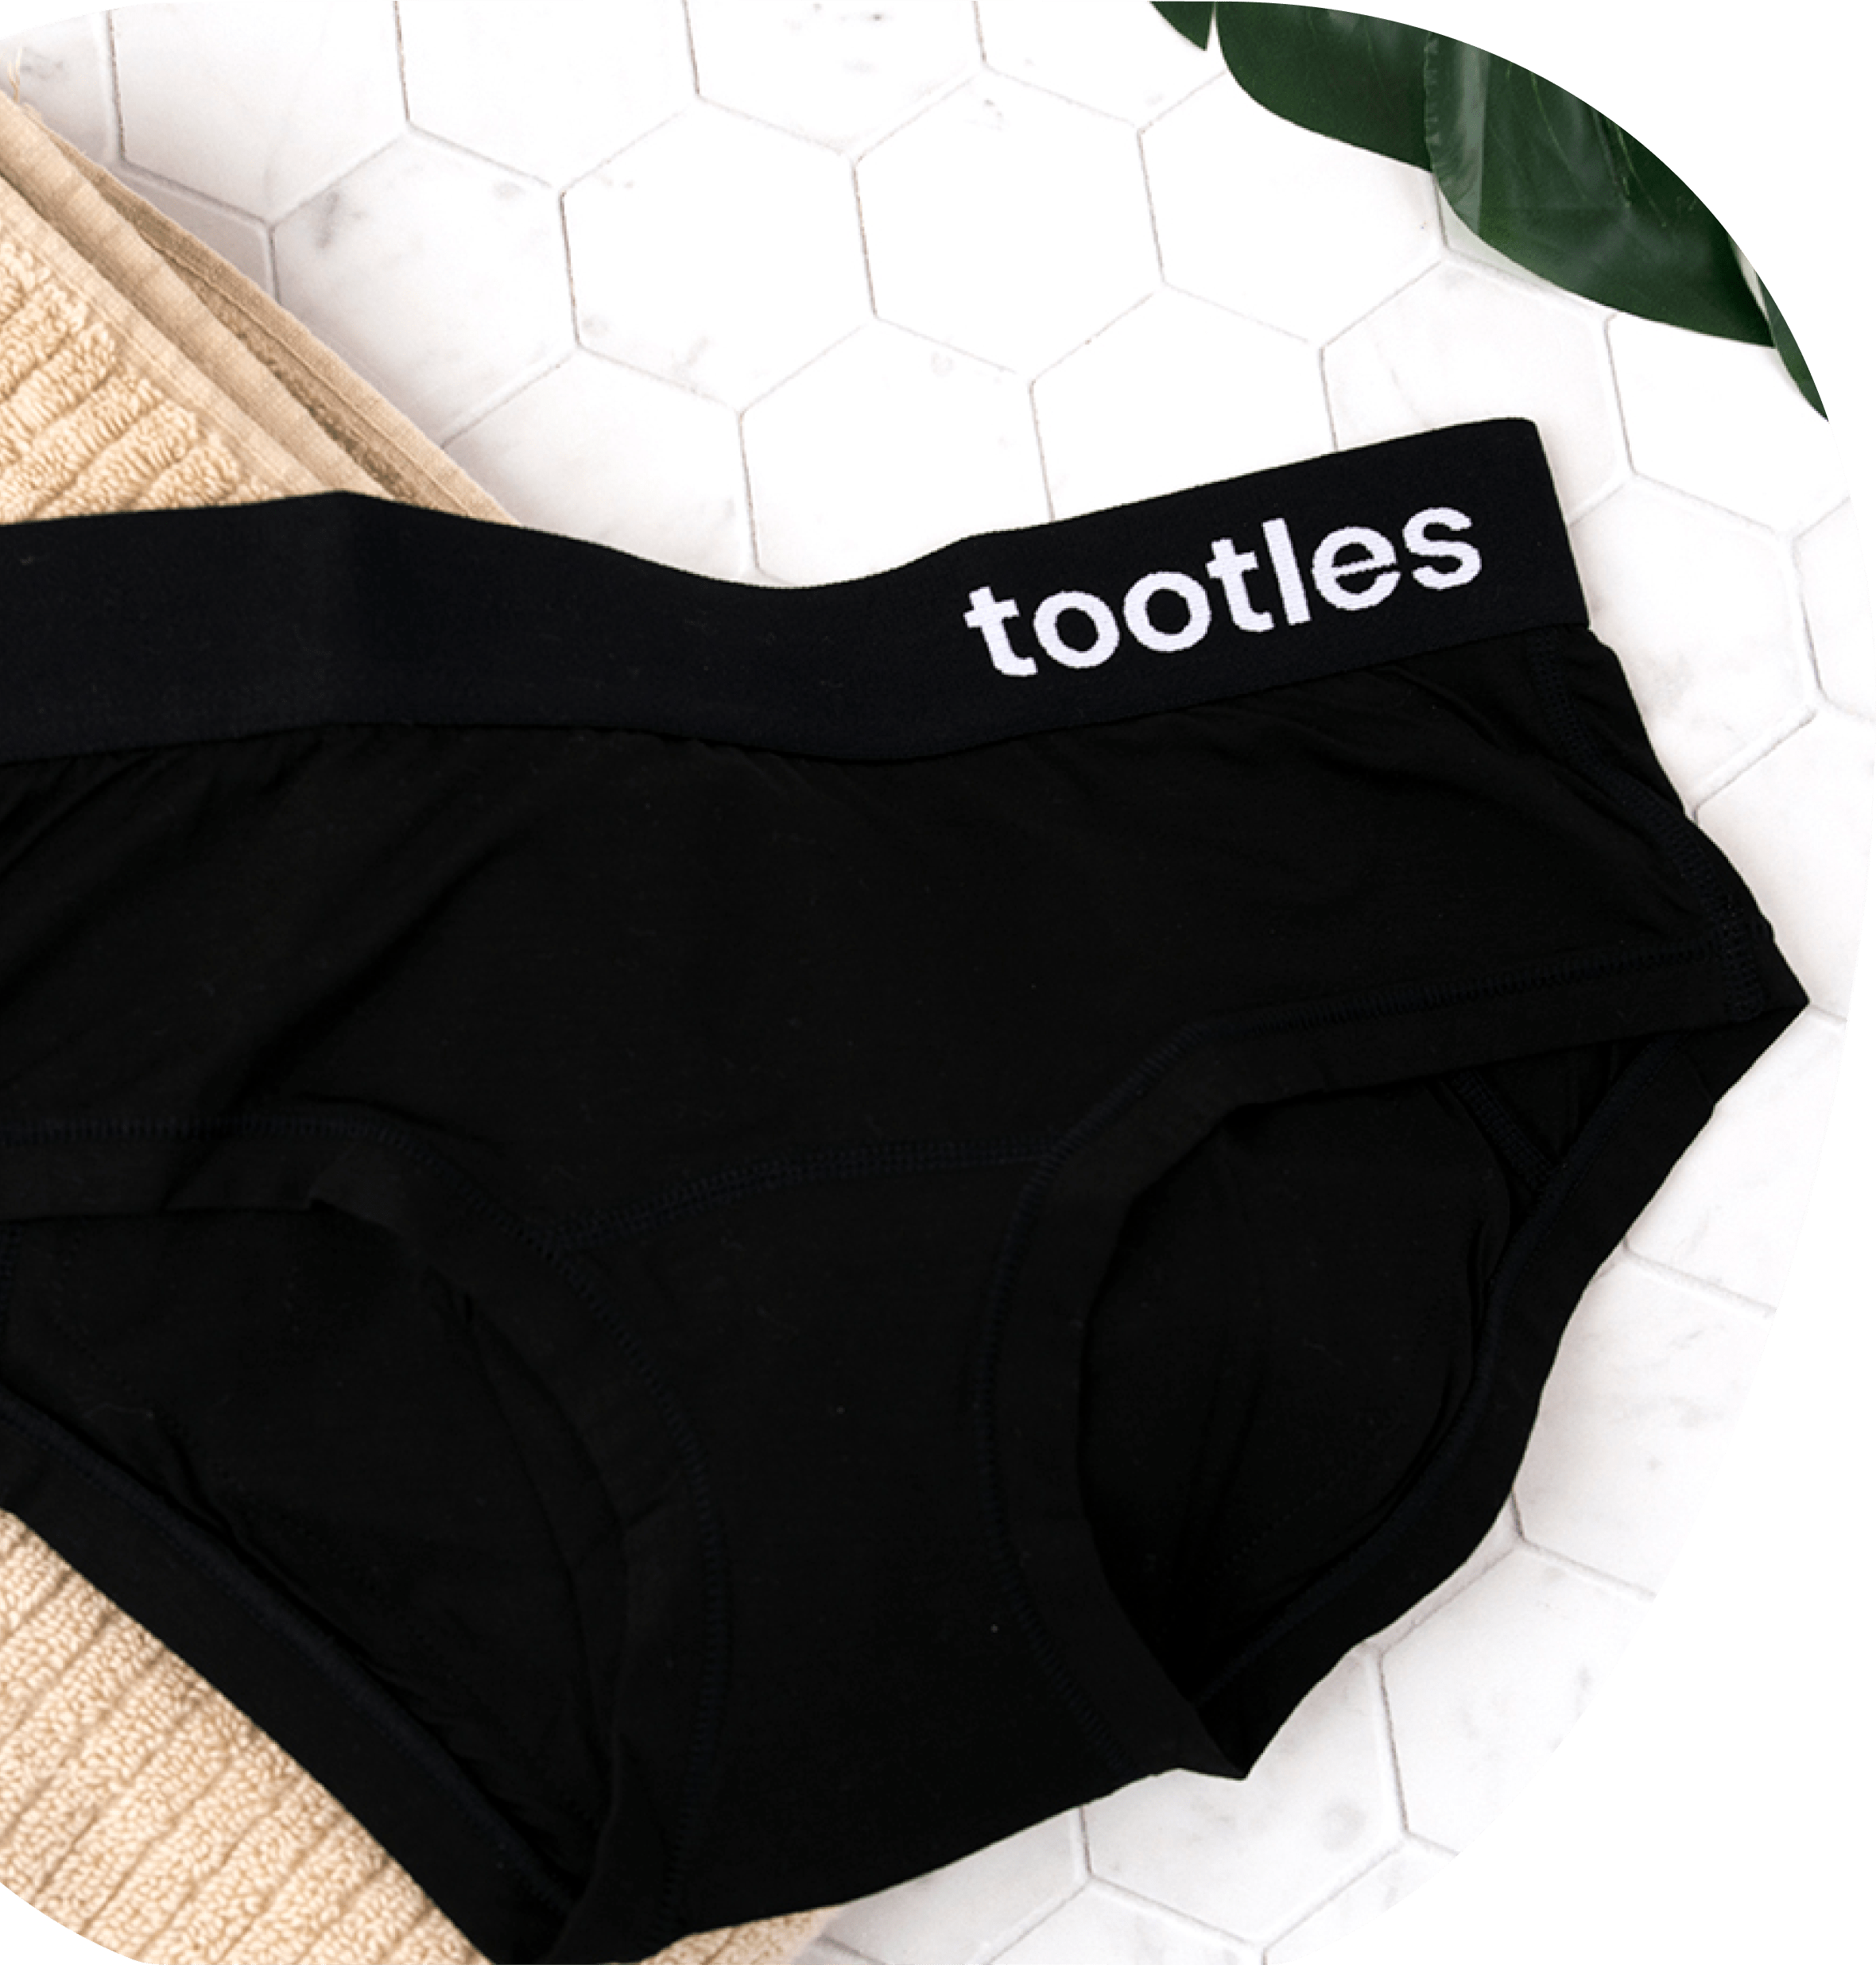 TOOTLES-Mens Fart Filtering Charcoal Underwear-Flatulence